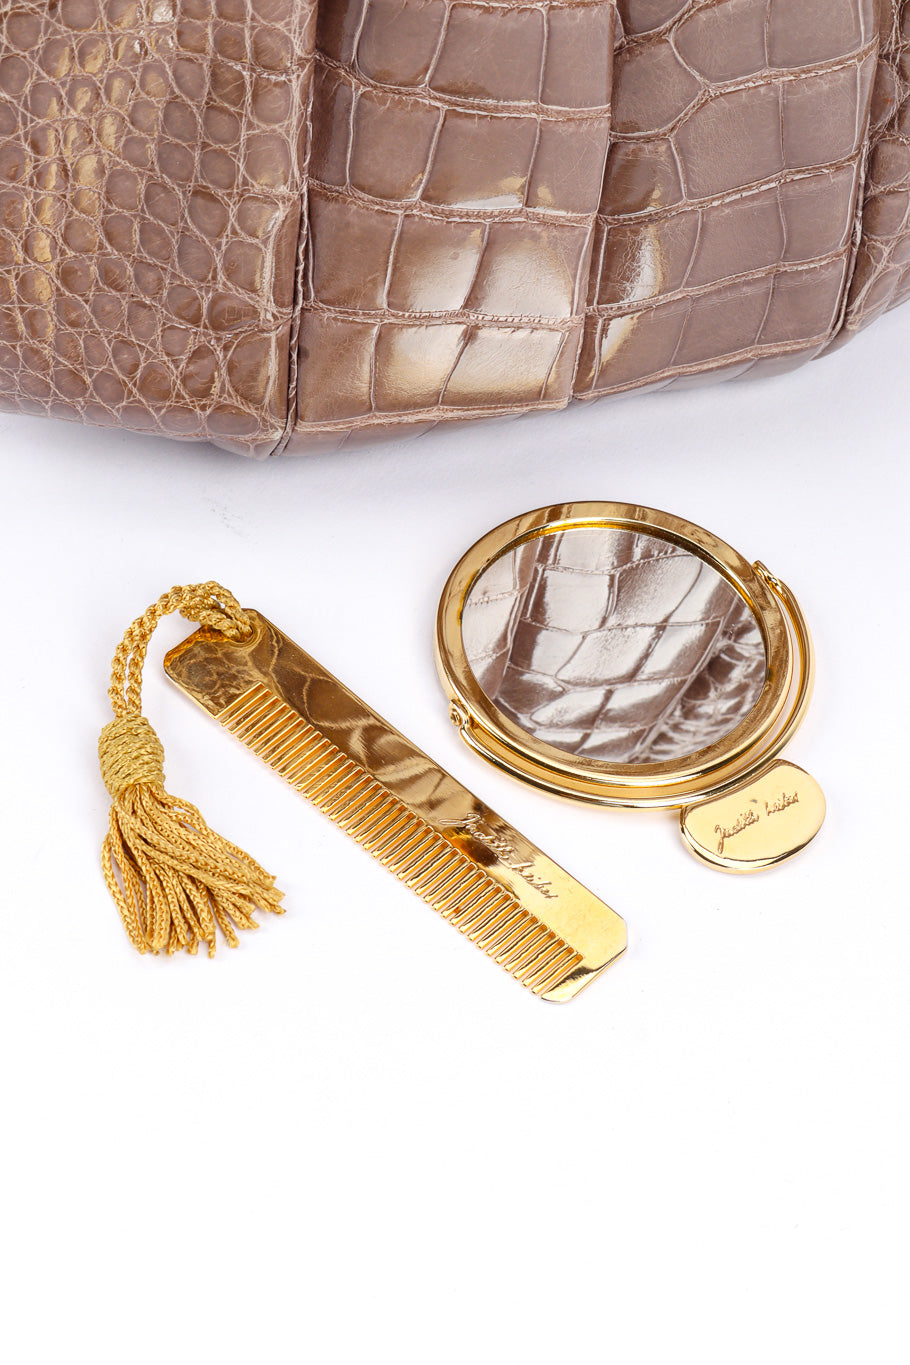 Ruched Alligator Handbag by Judith Leiber comb and mirror @recessla